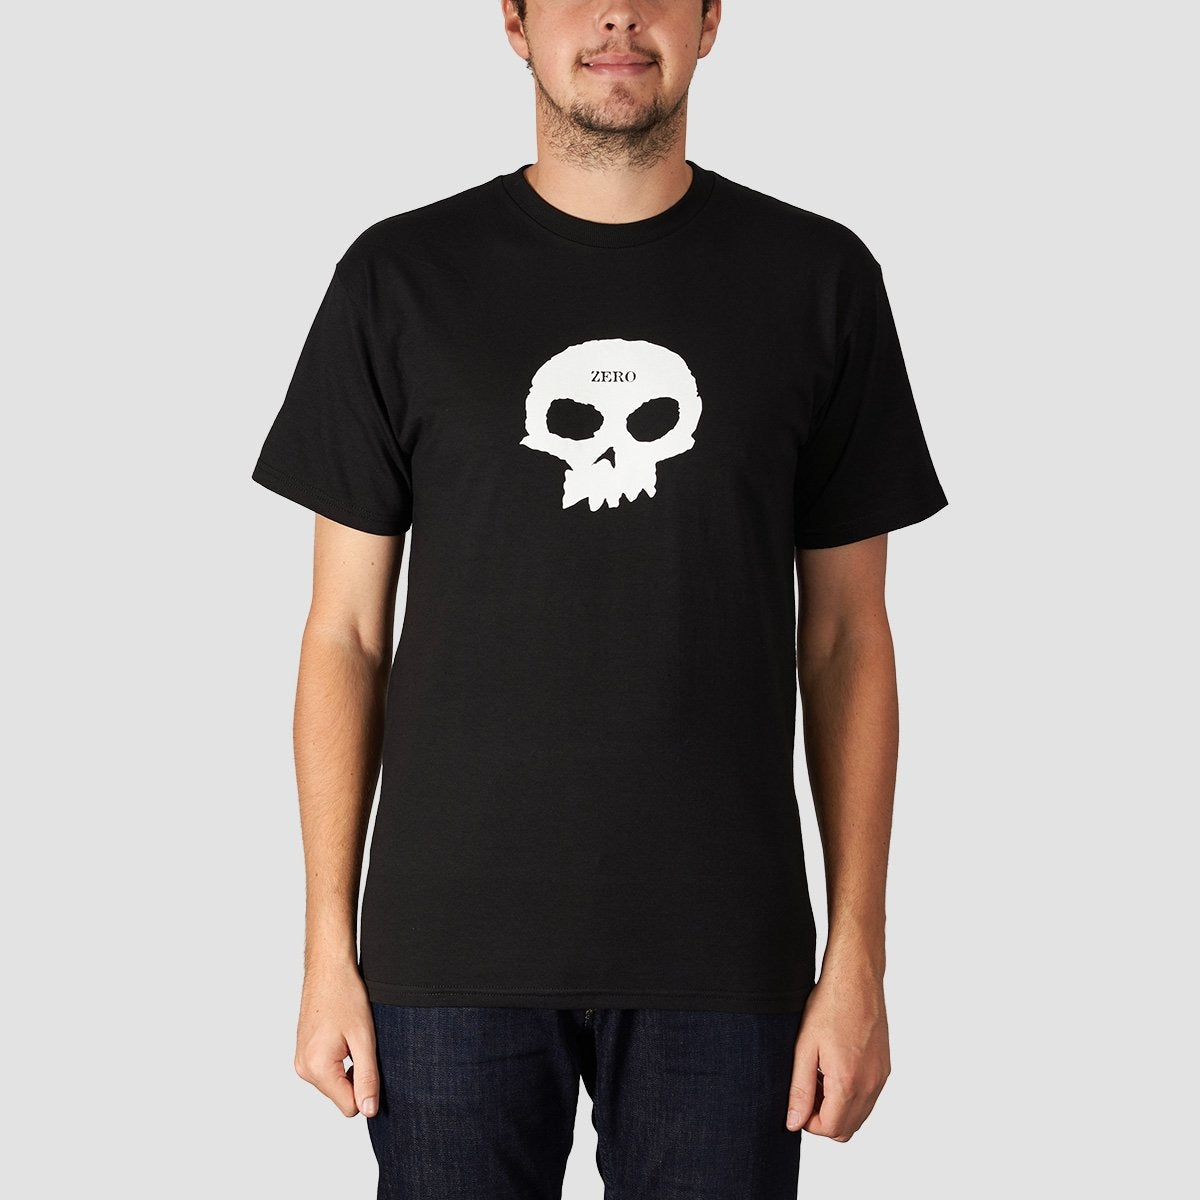 Zero Single Skull Tee Black - Clothing